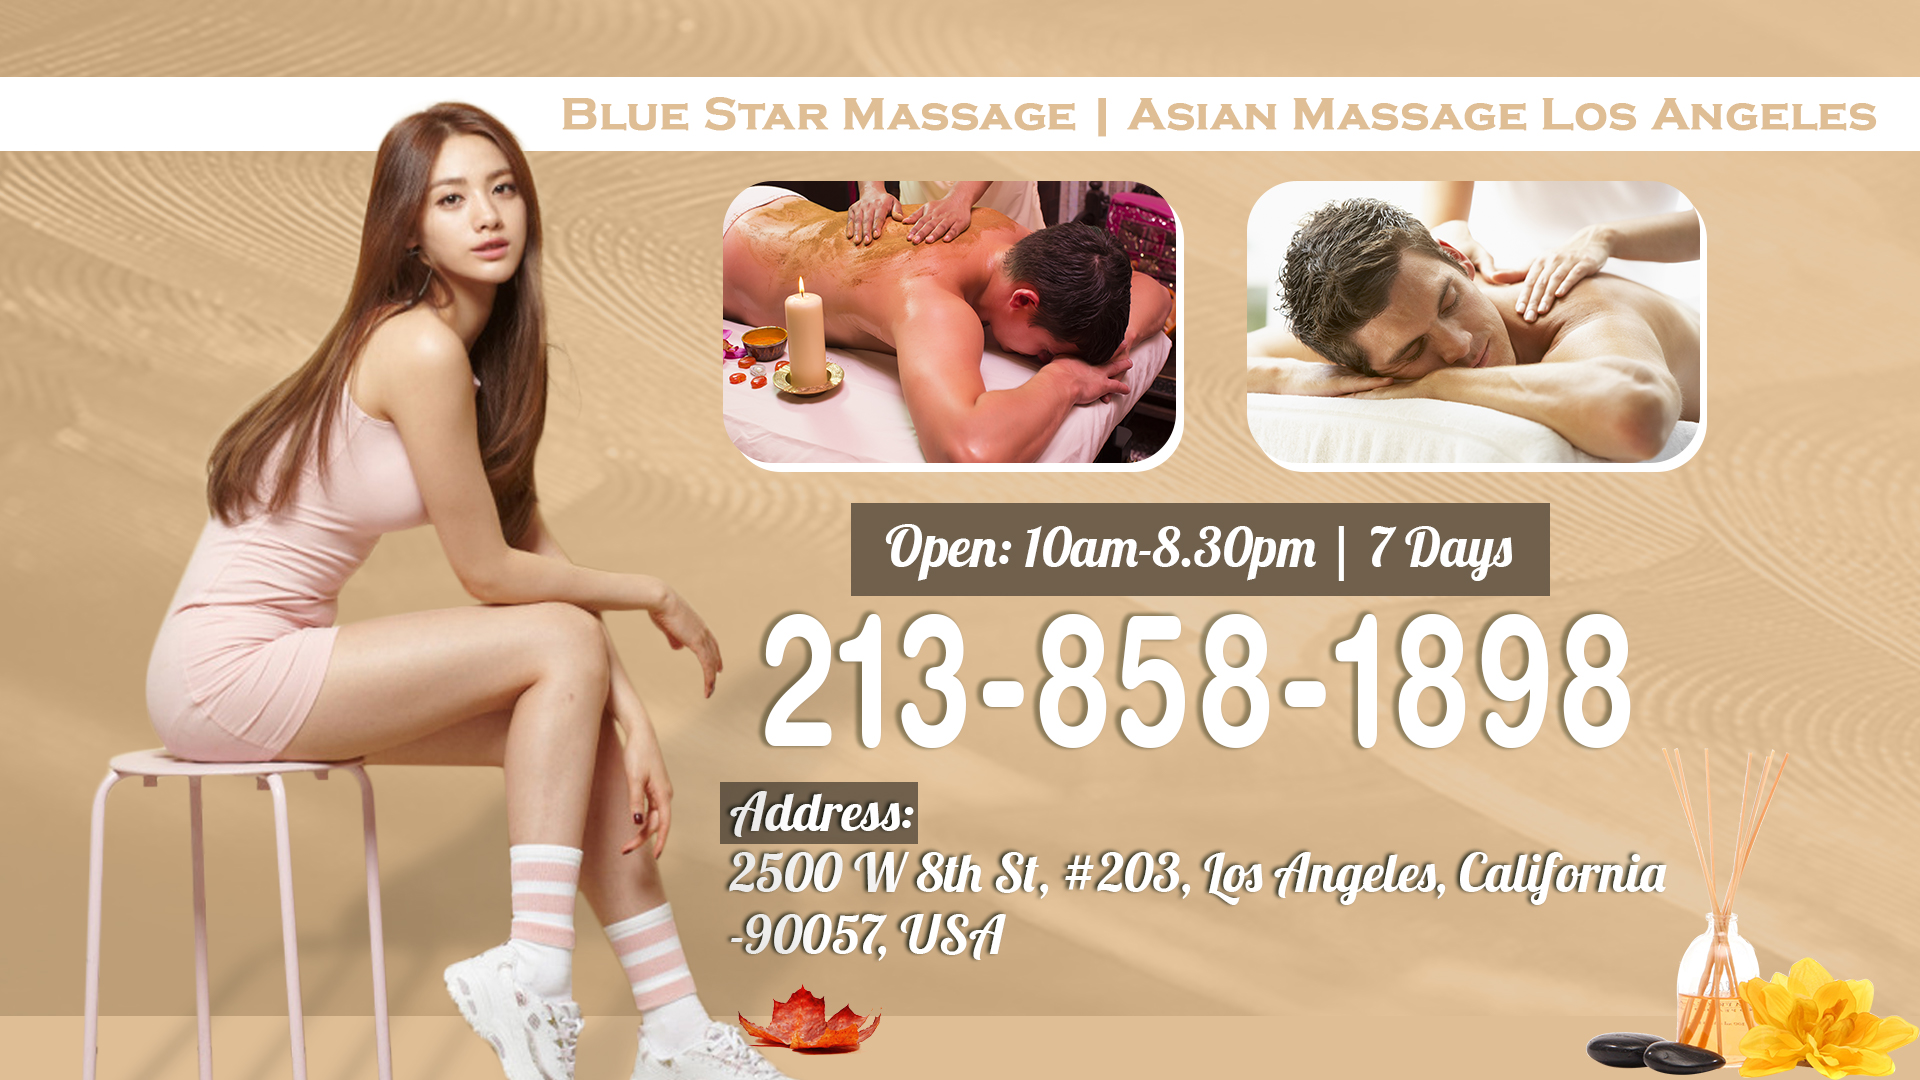 connie ler share los angeles adult massage photos